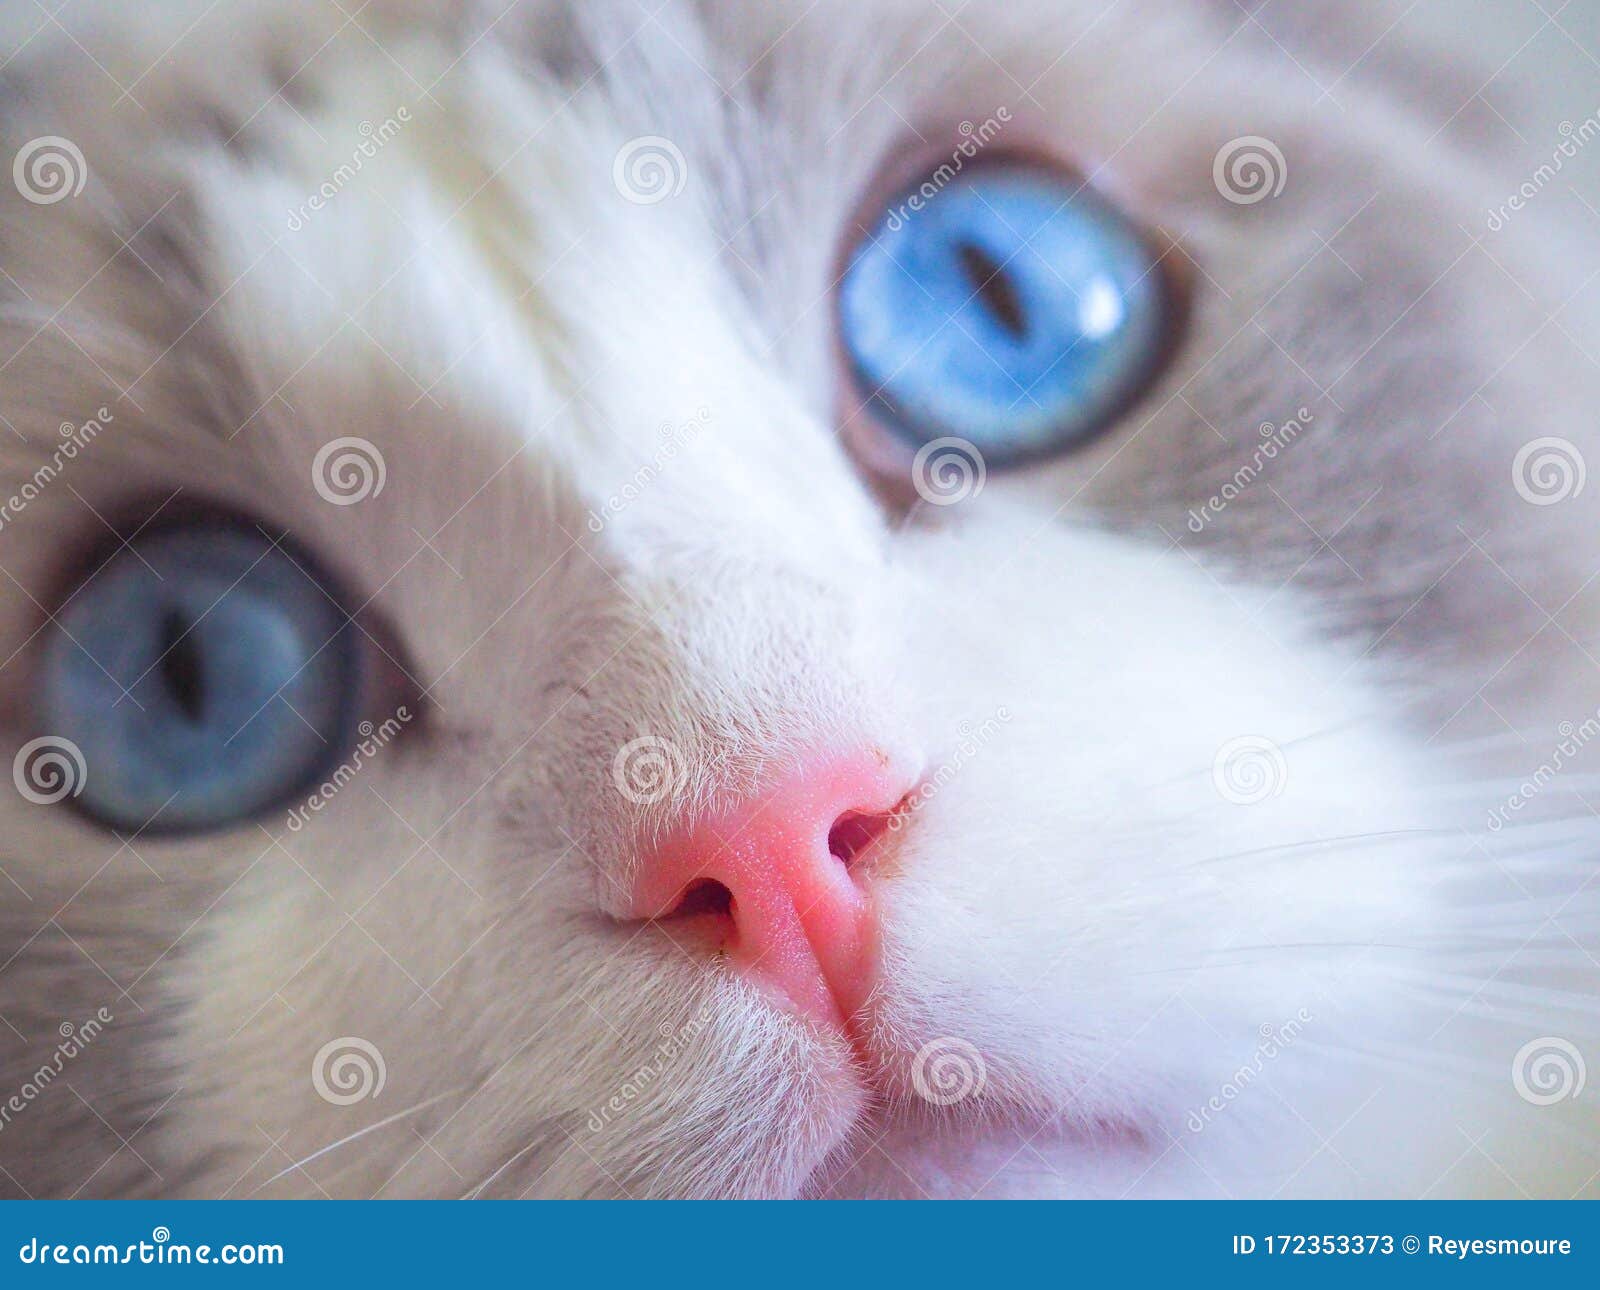 adorable ragdoll cat with big blue eyes.